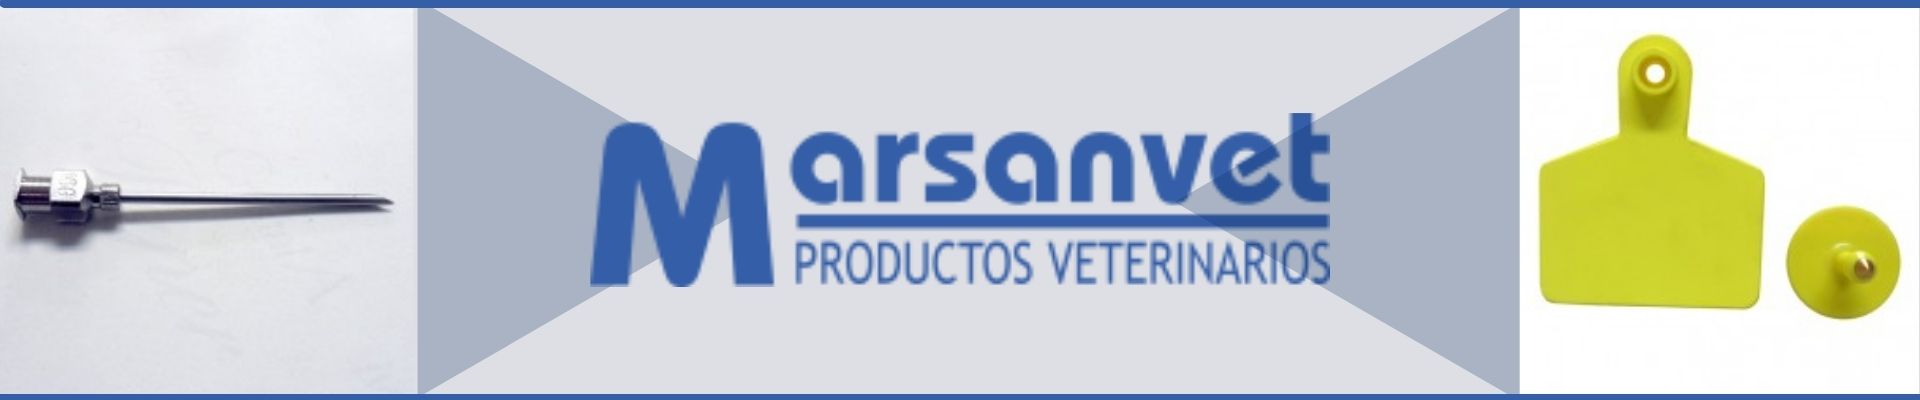 Banner Marsanvet Productos Veterinarios